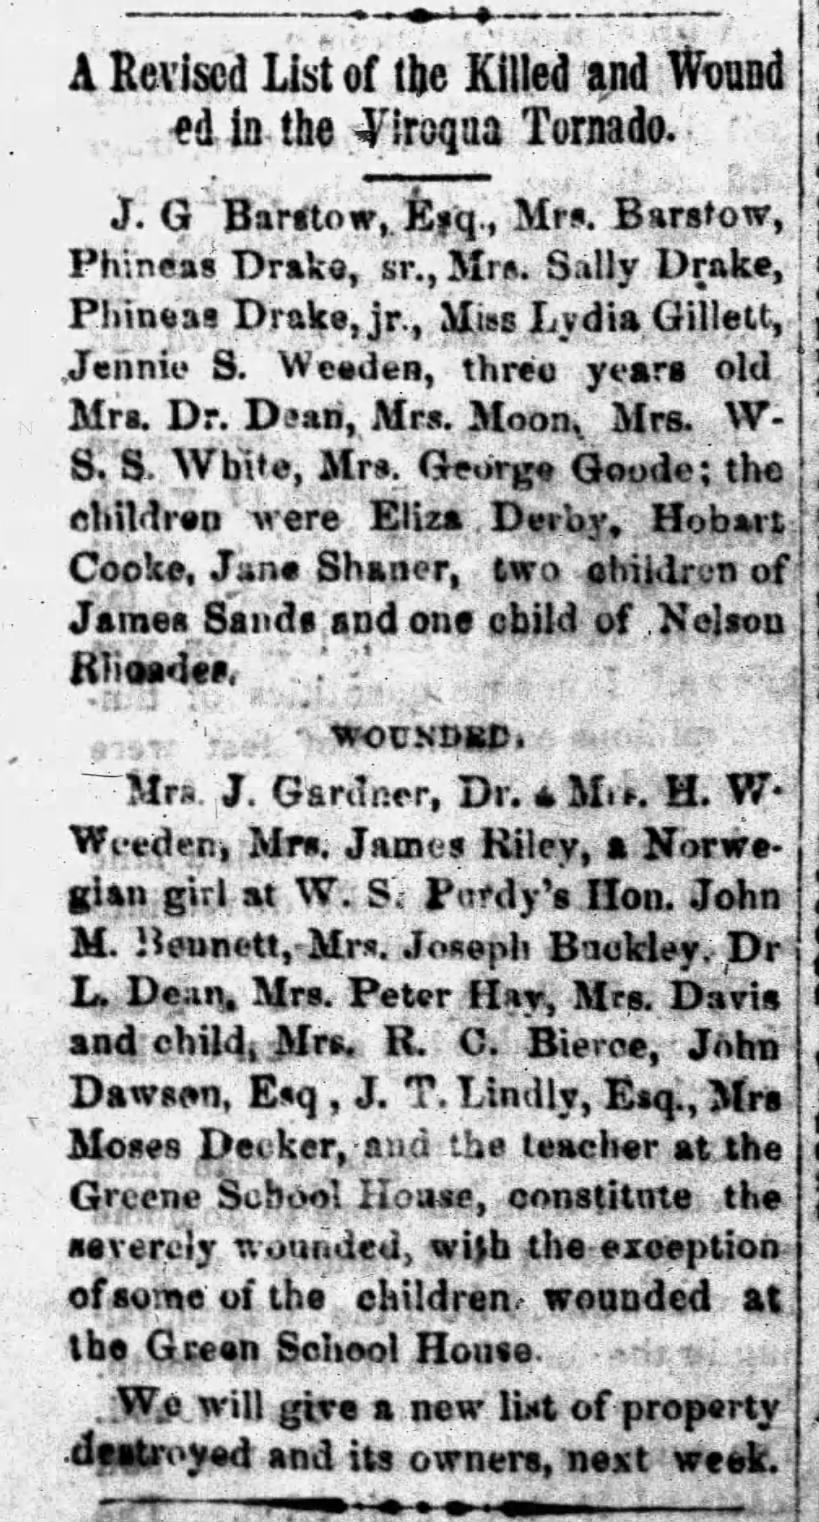 Casualty list for Viroqua tornado 1865